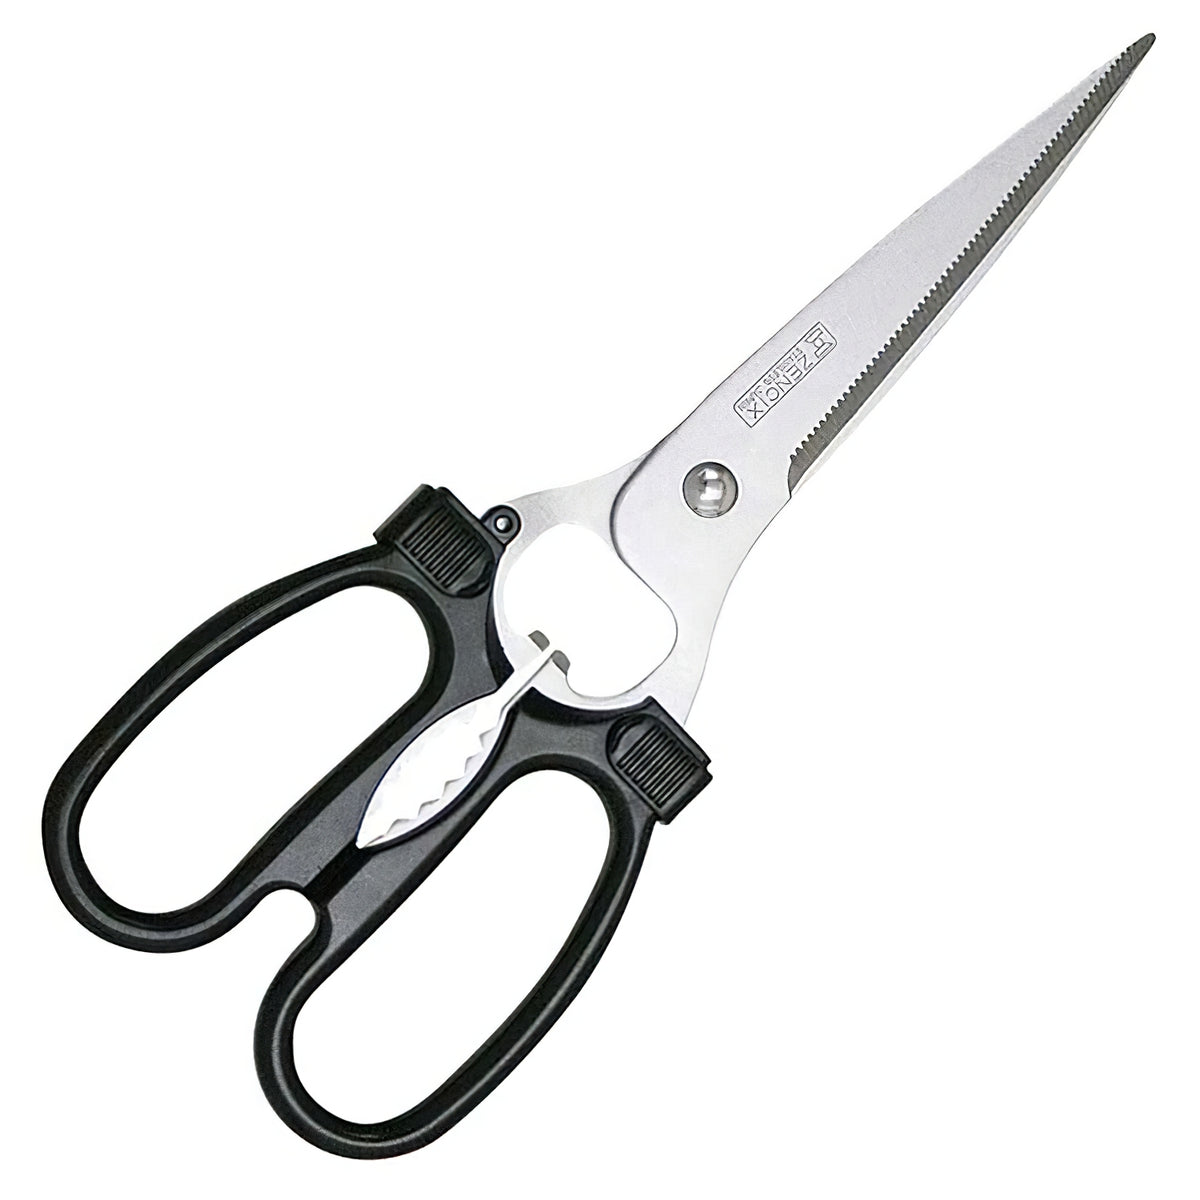 Toa Scissors Stainless Steel Take-Apart Long Kitchen Scissors